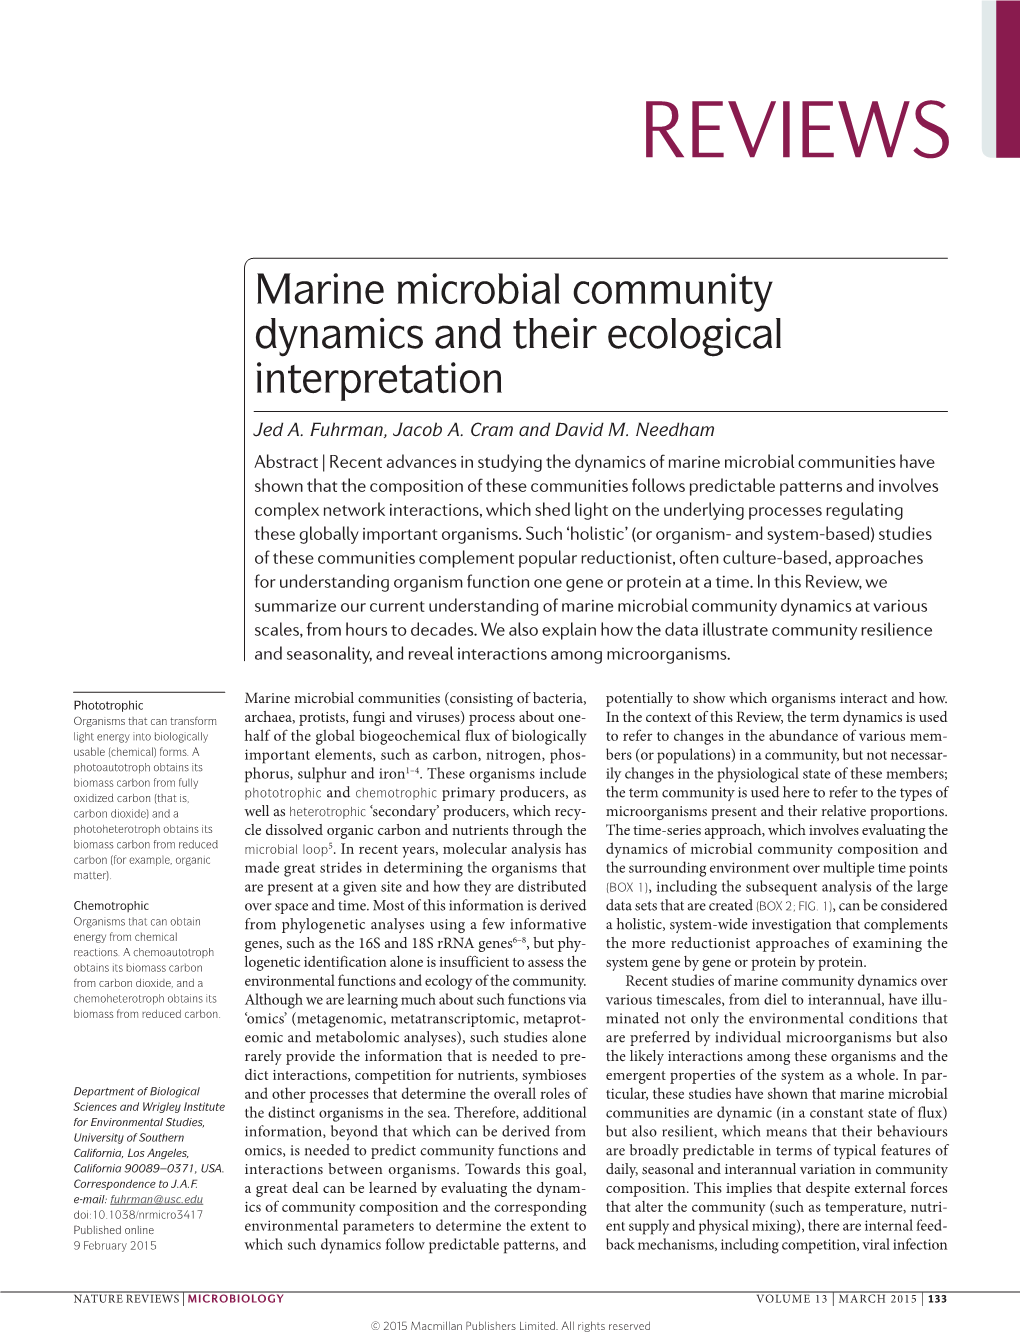 Marine Microbial Community Dynamics and Their Ecological Interpretation